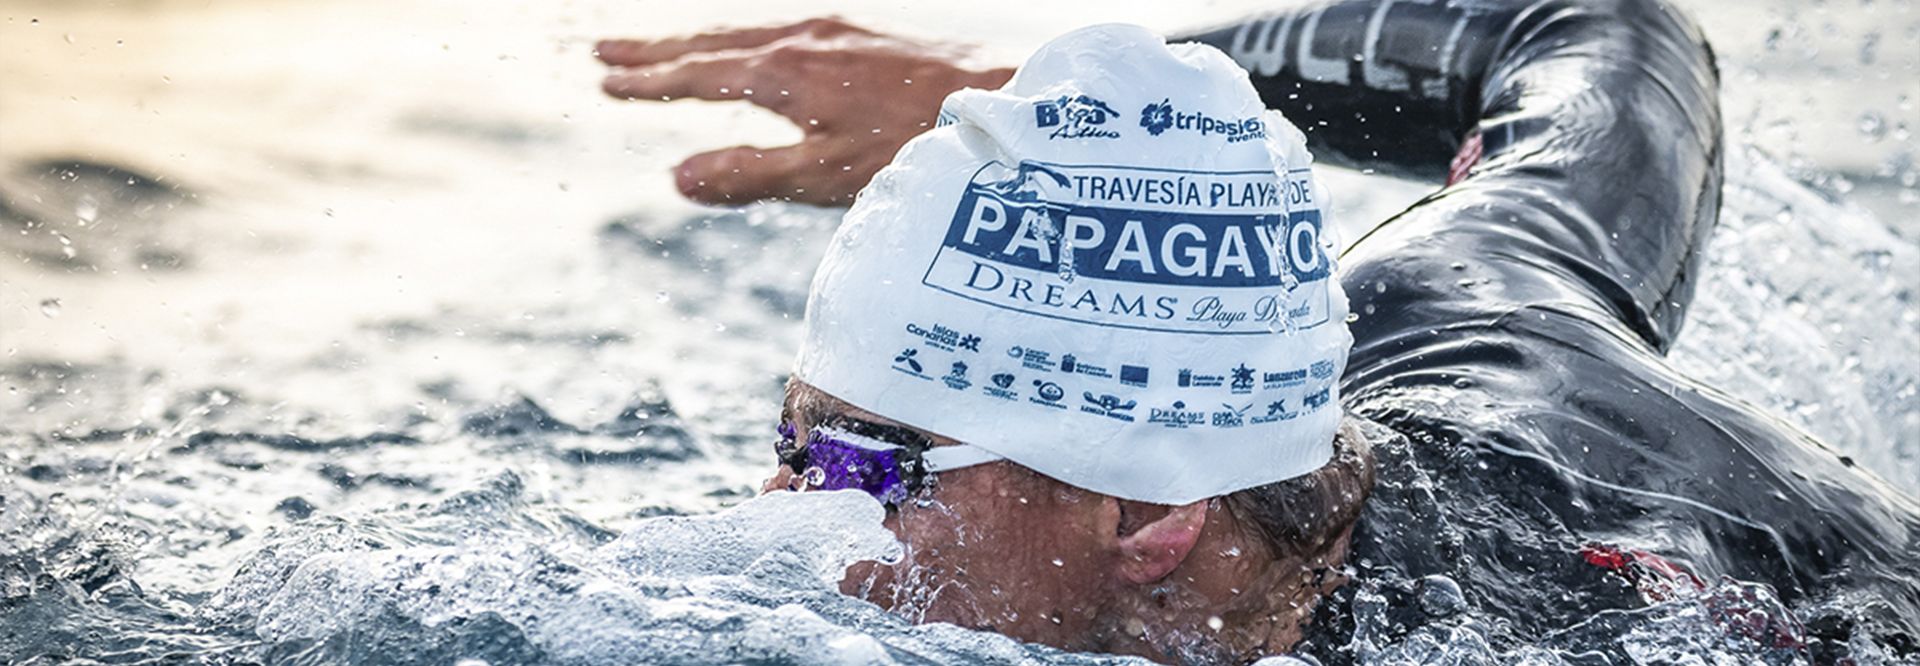 This was Yaizart's participation in the Papagayo Dreams Playa Dorada Beach Swim Crossing.